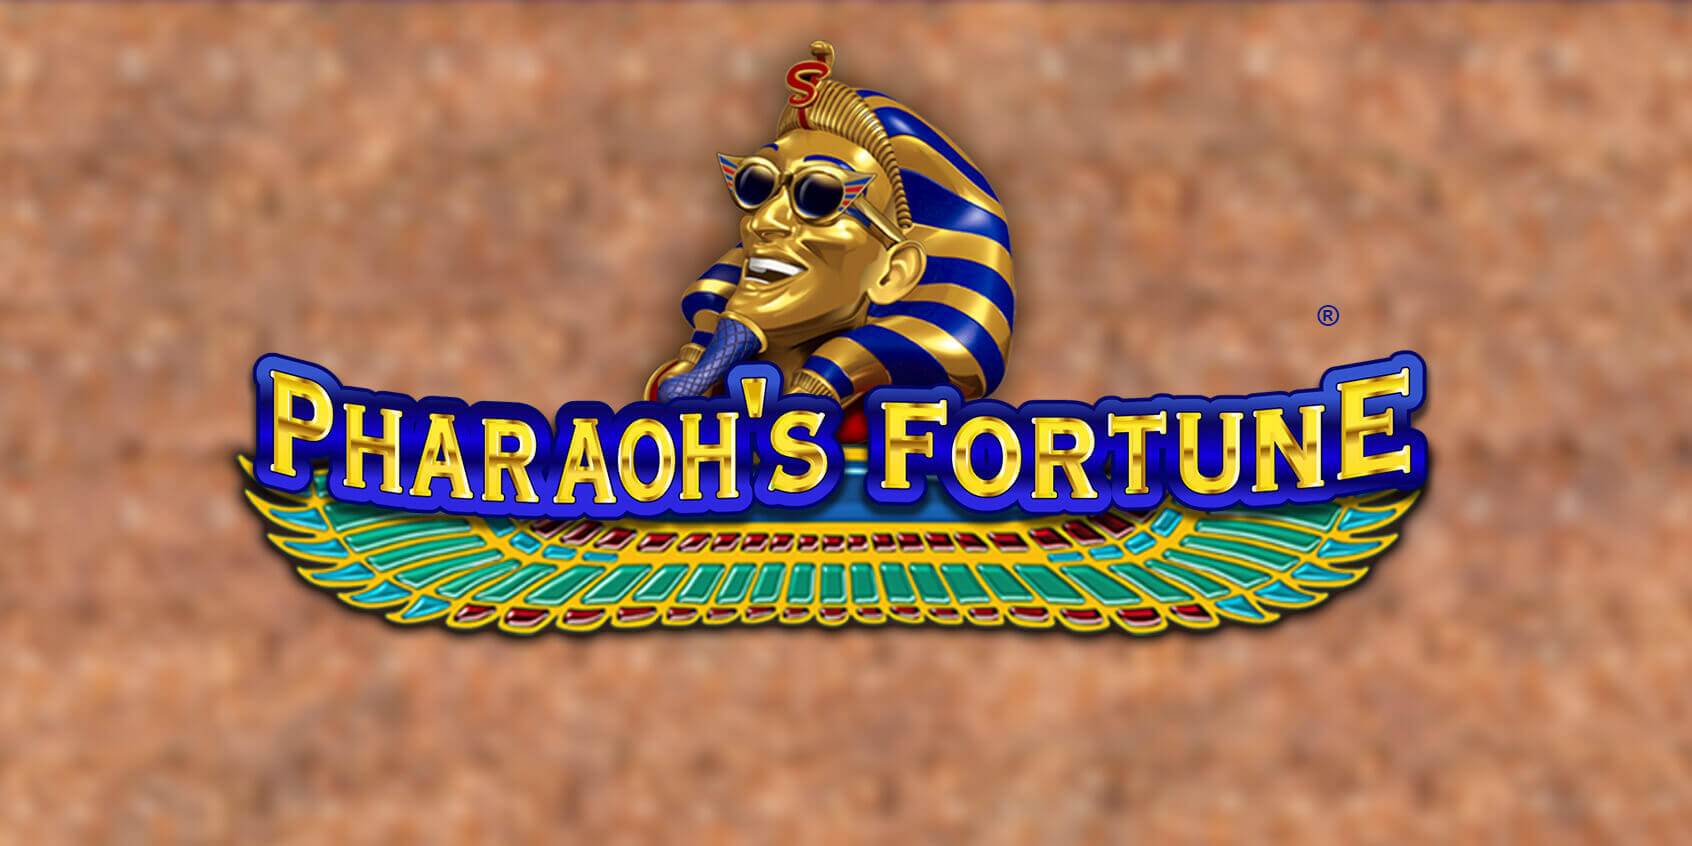 Pharaoh's Fortune slot review